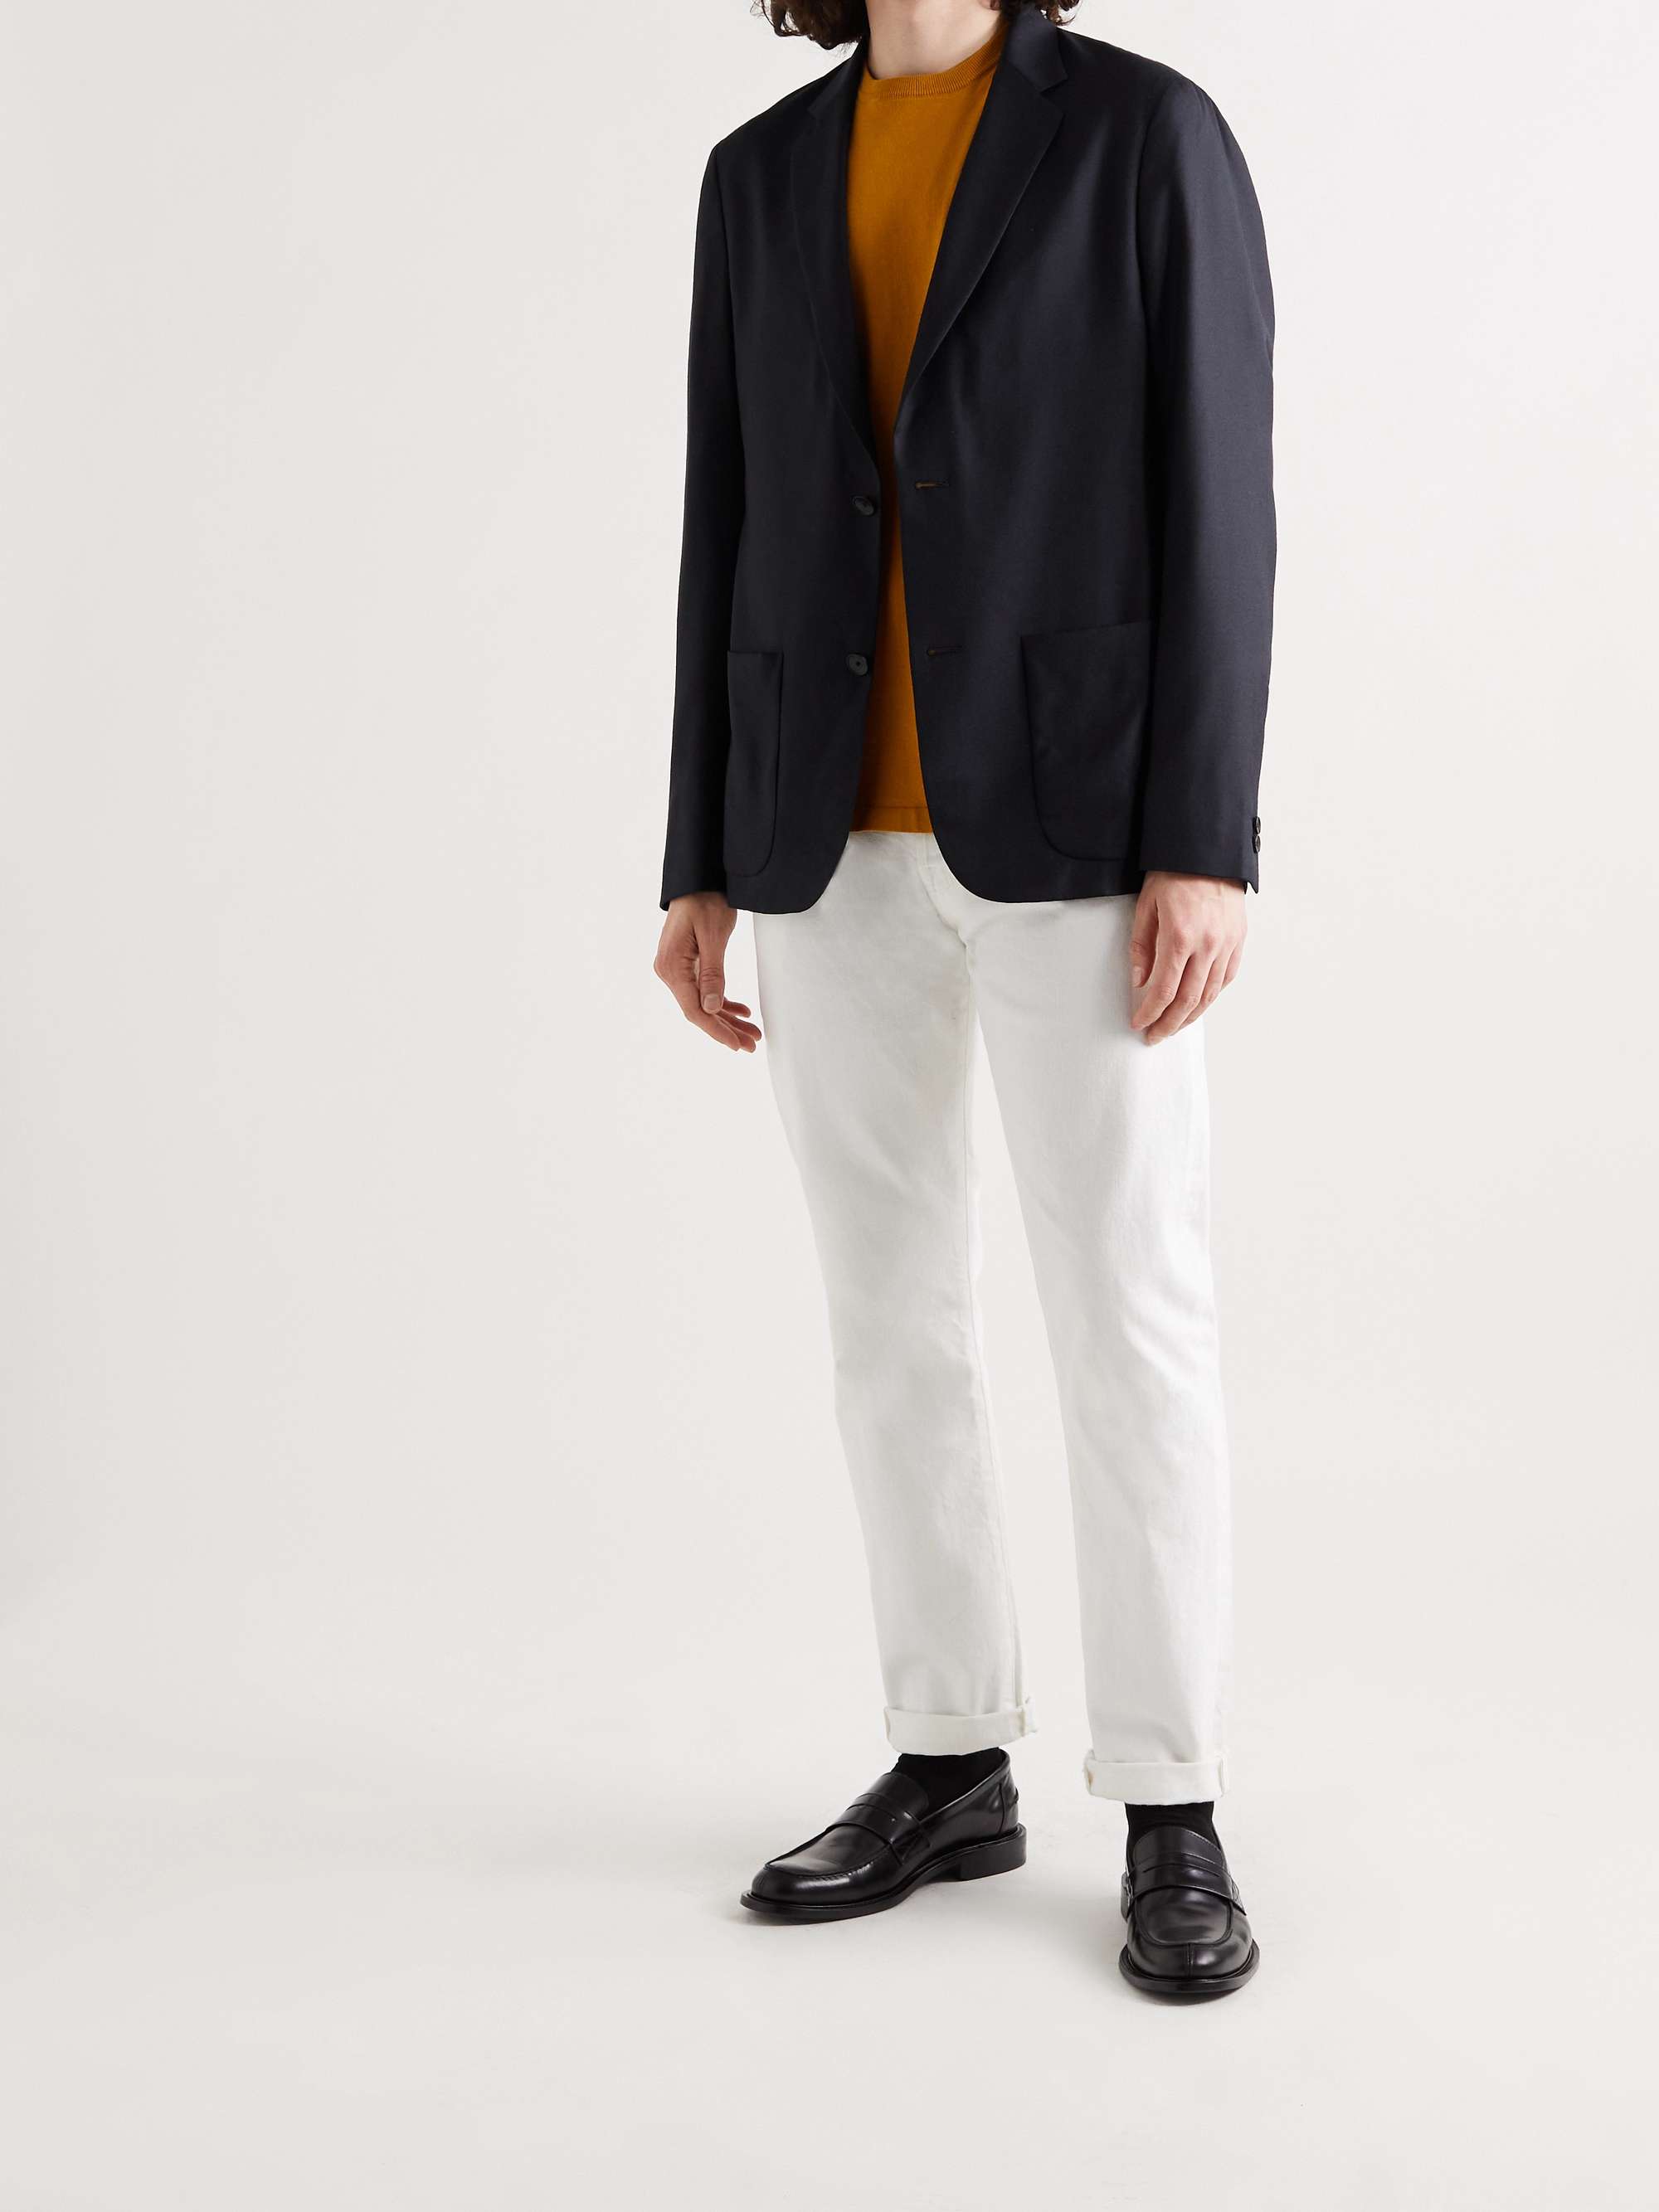 MR P. Lightweight Unstructured Cashmere and Silk-Blend Jacket for Men ...